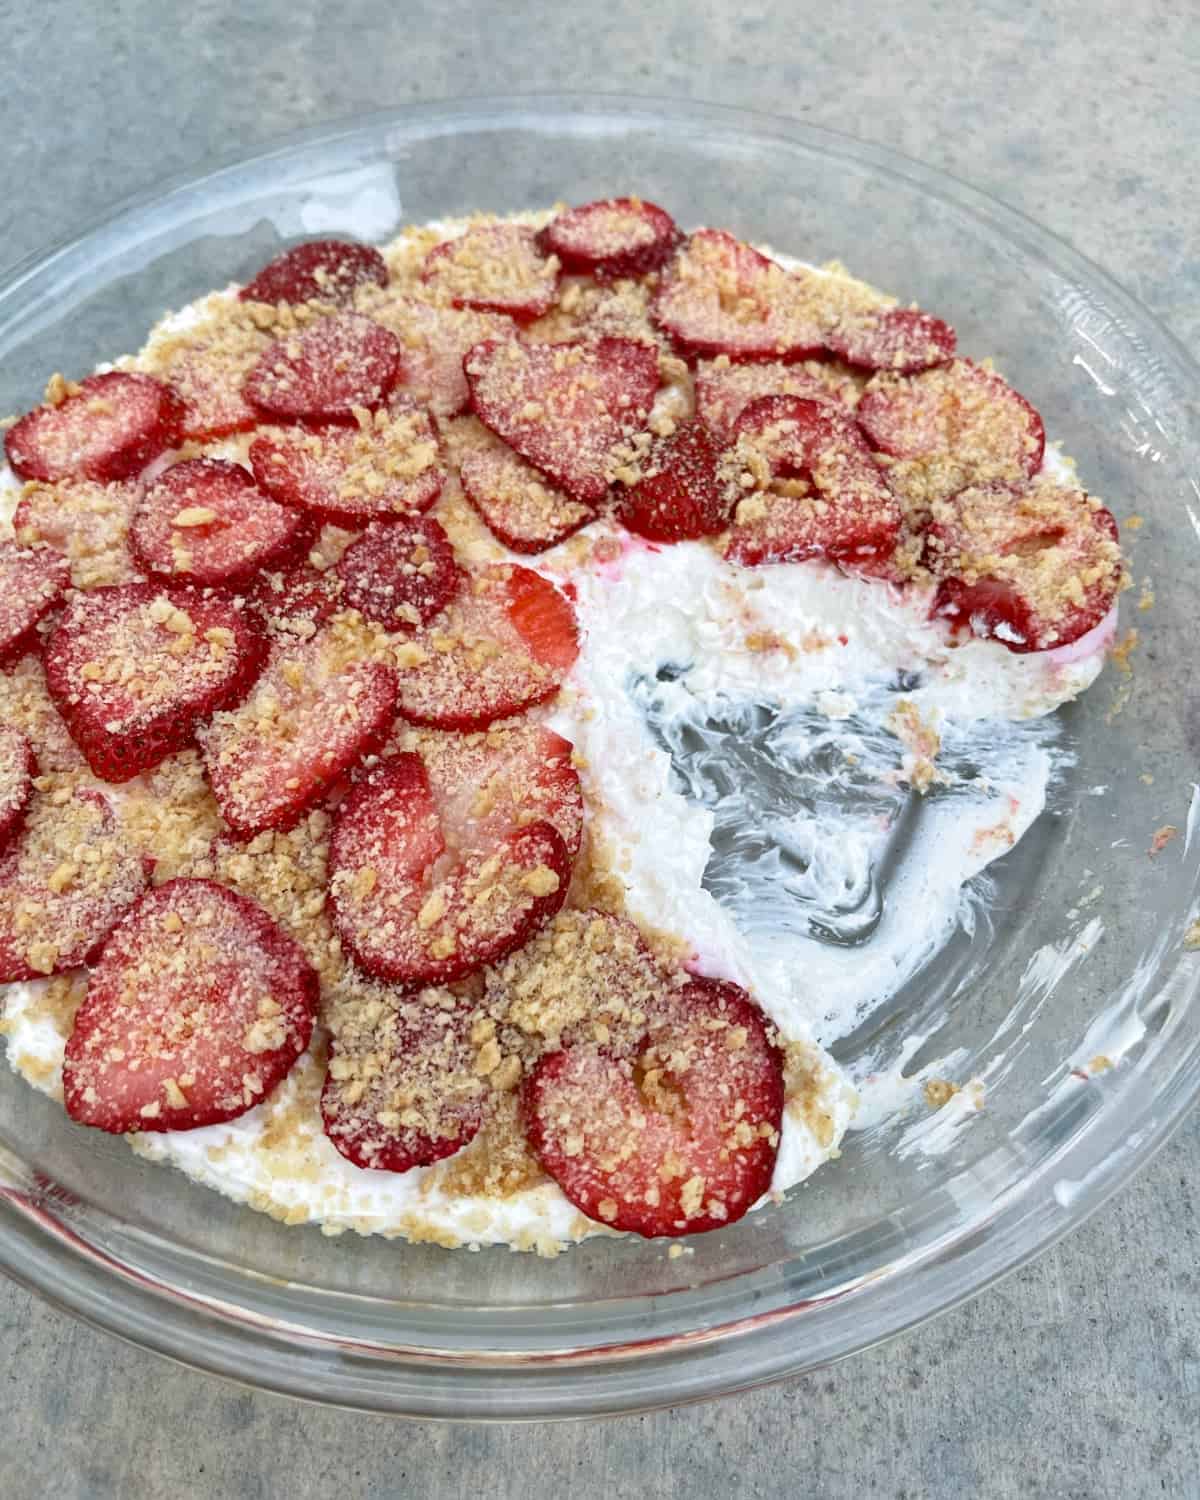 Serving no-bake strawberry cheesecake dessert from glass pie dish.